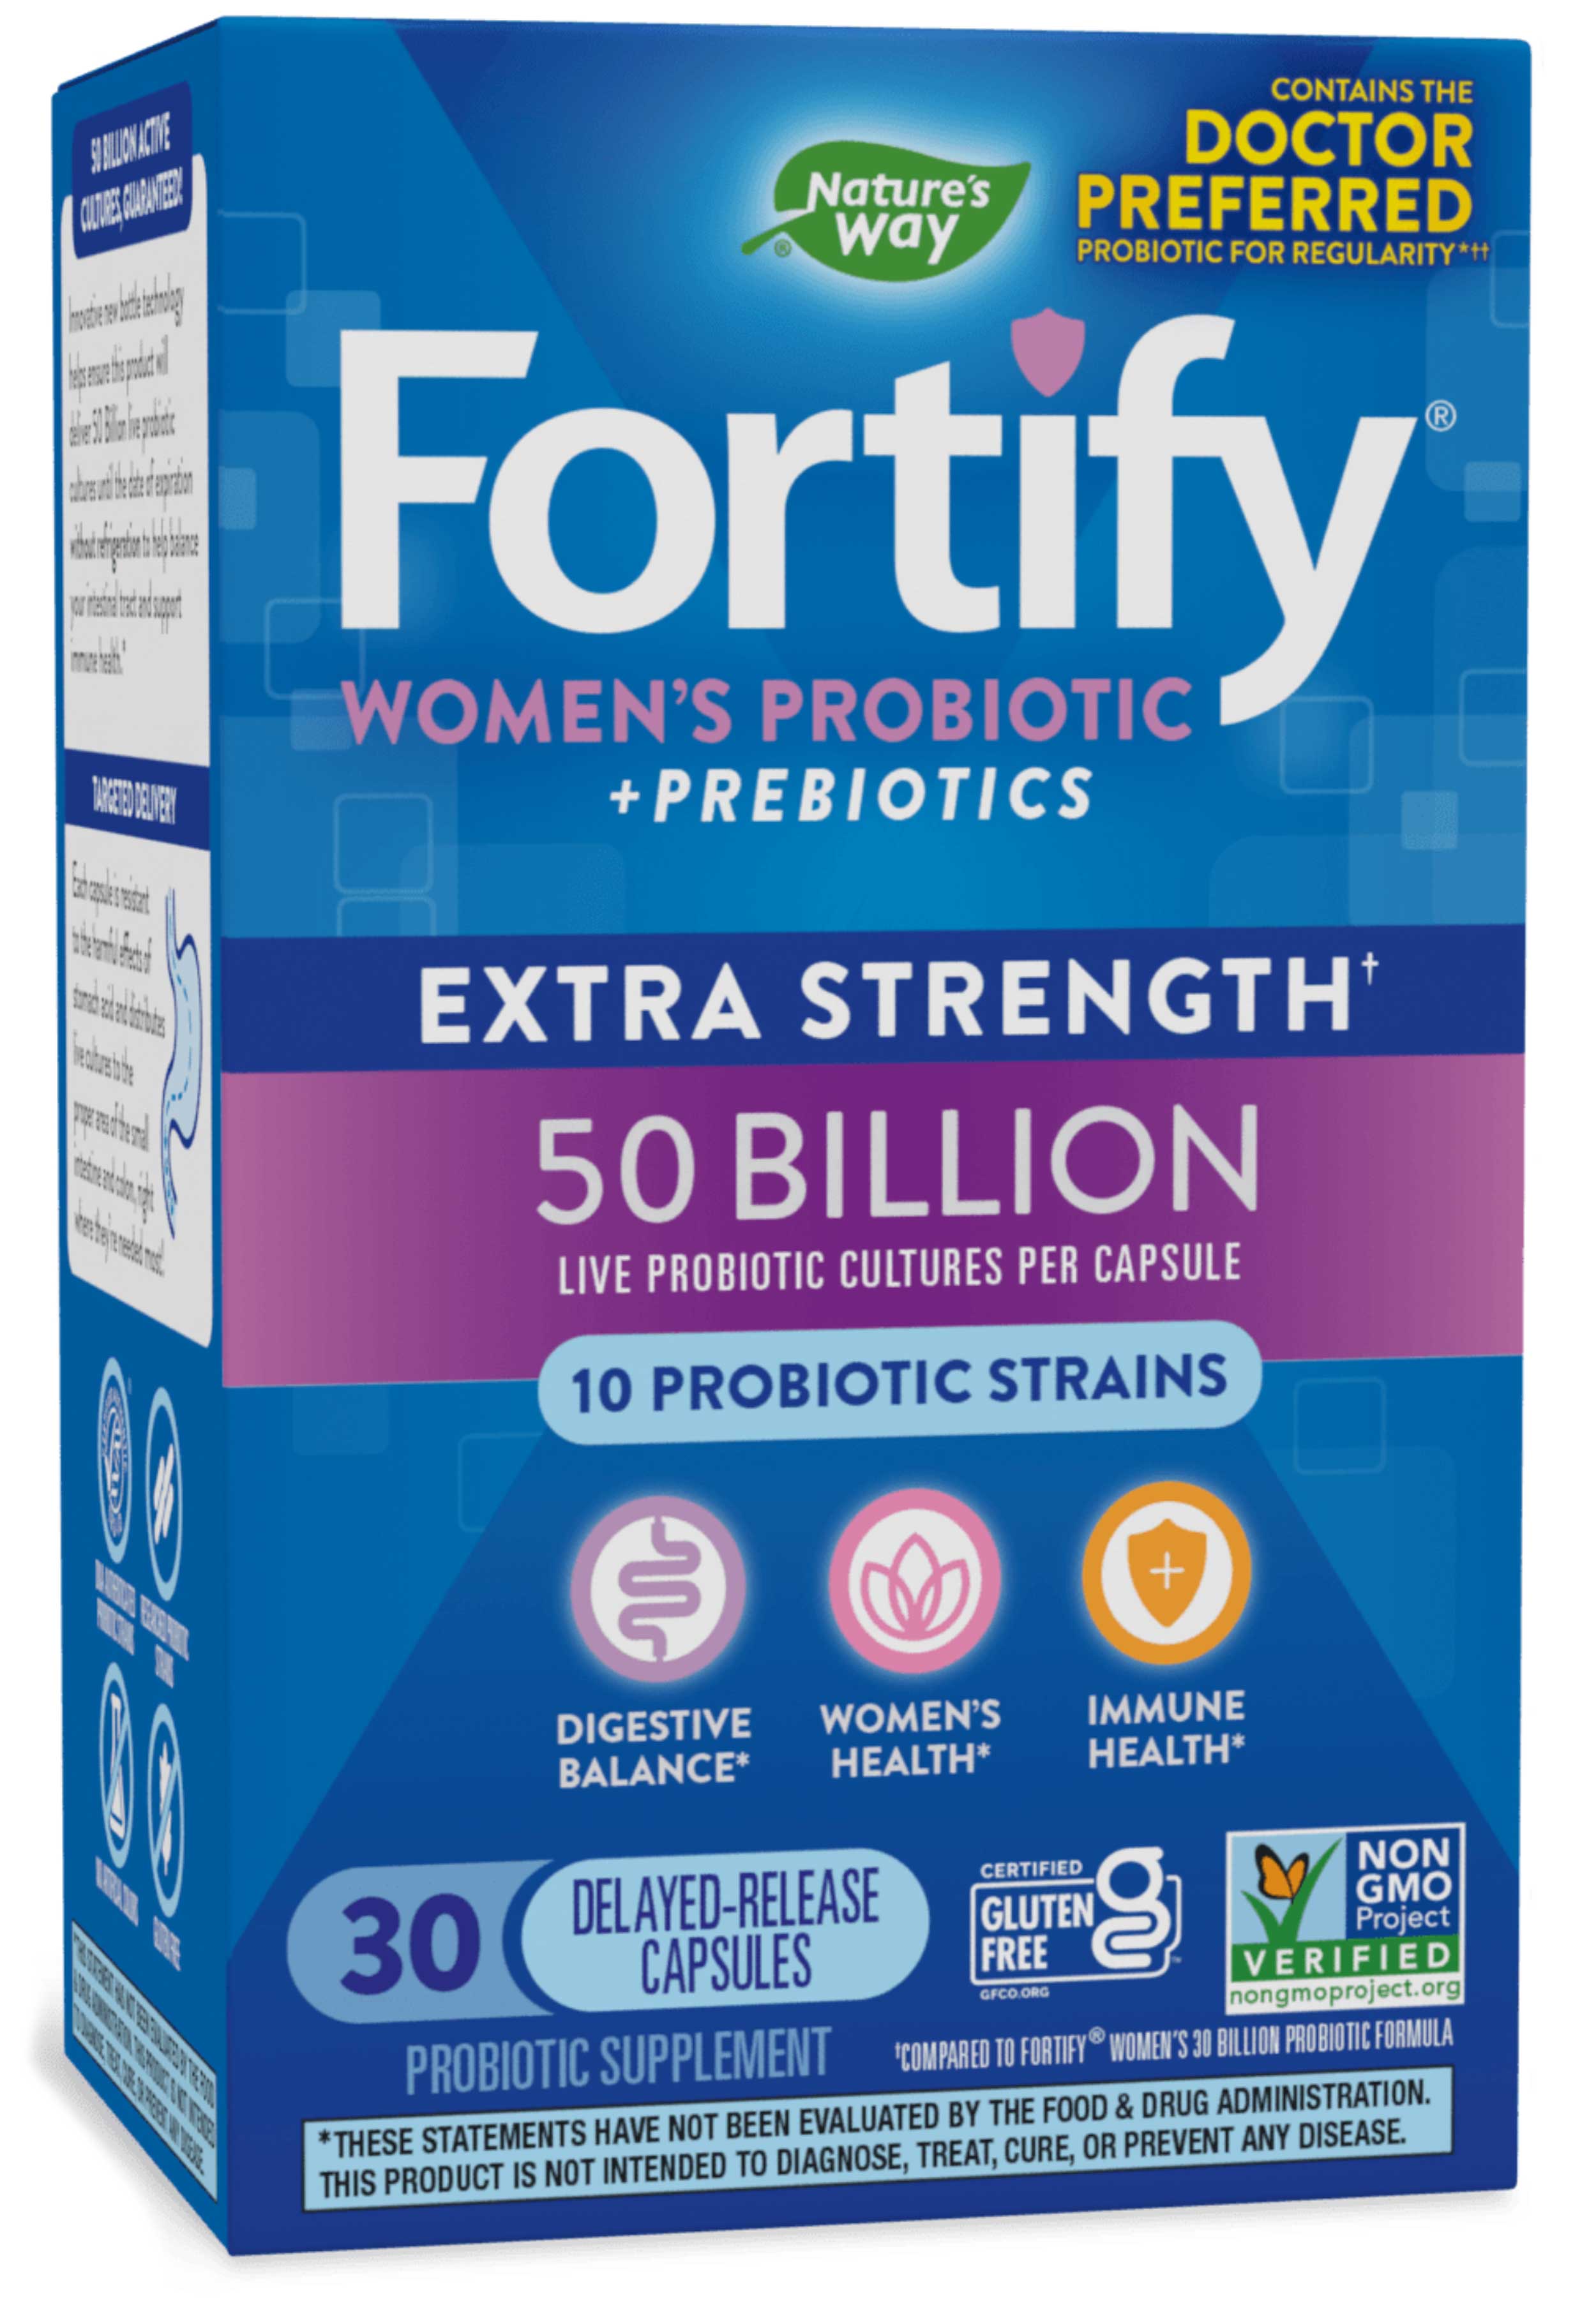 Nature's Way Fortify Women's 50 Billion Probiotic